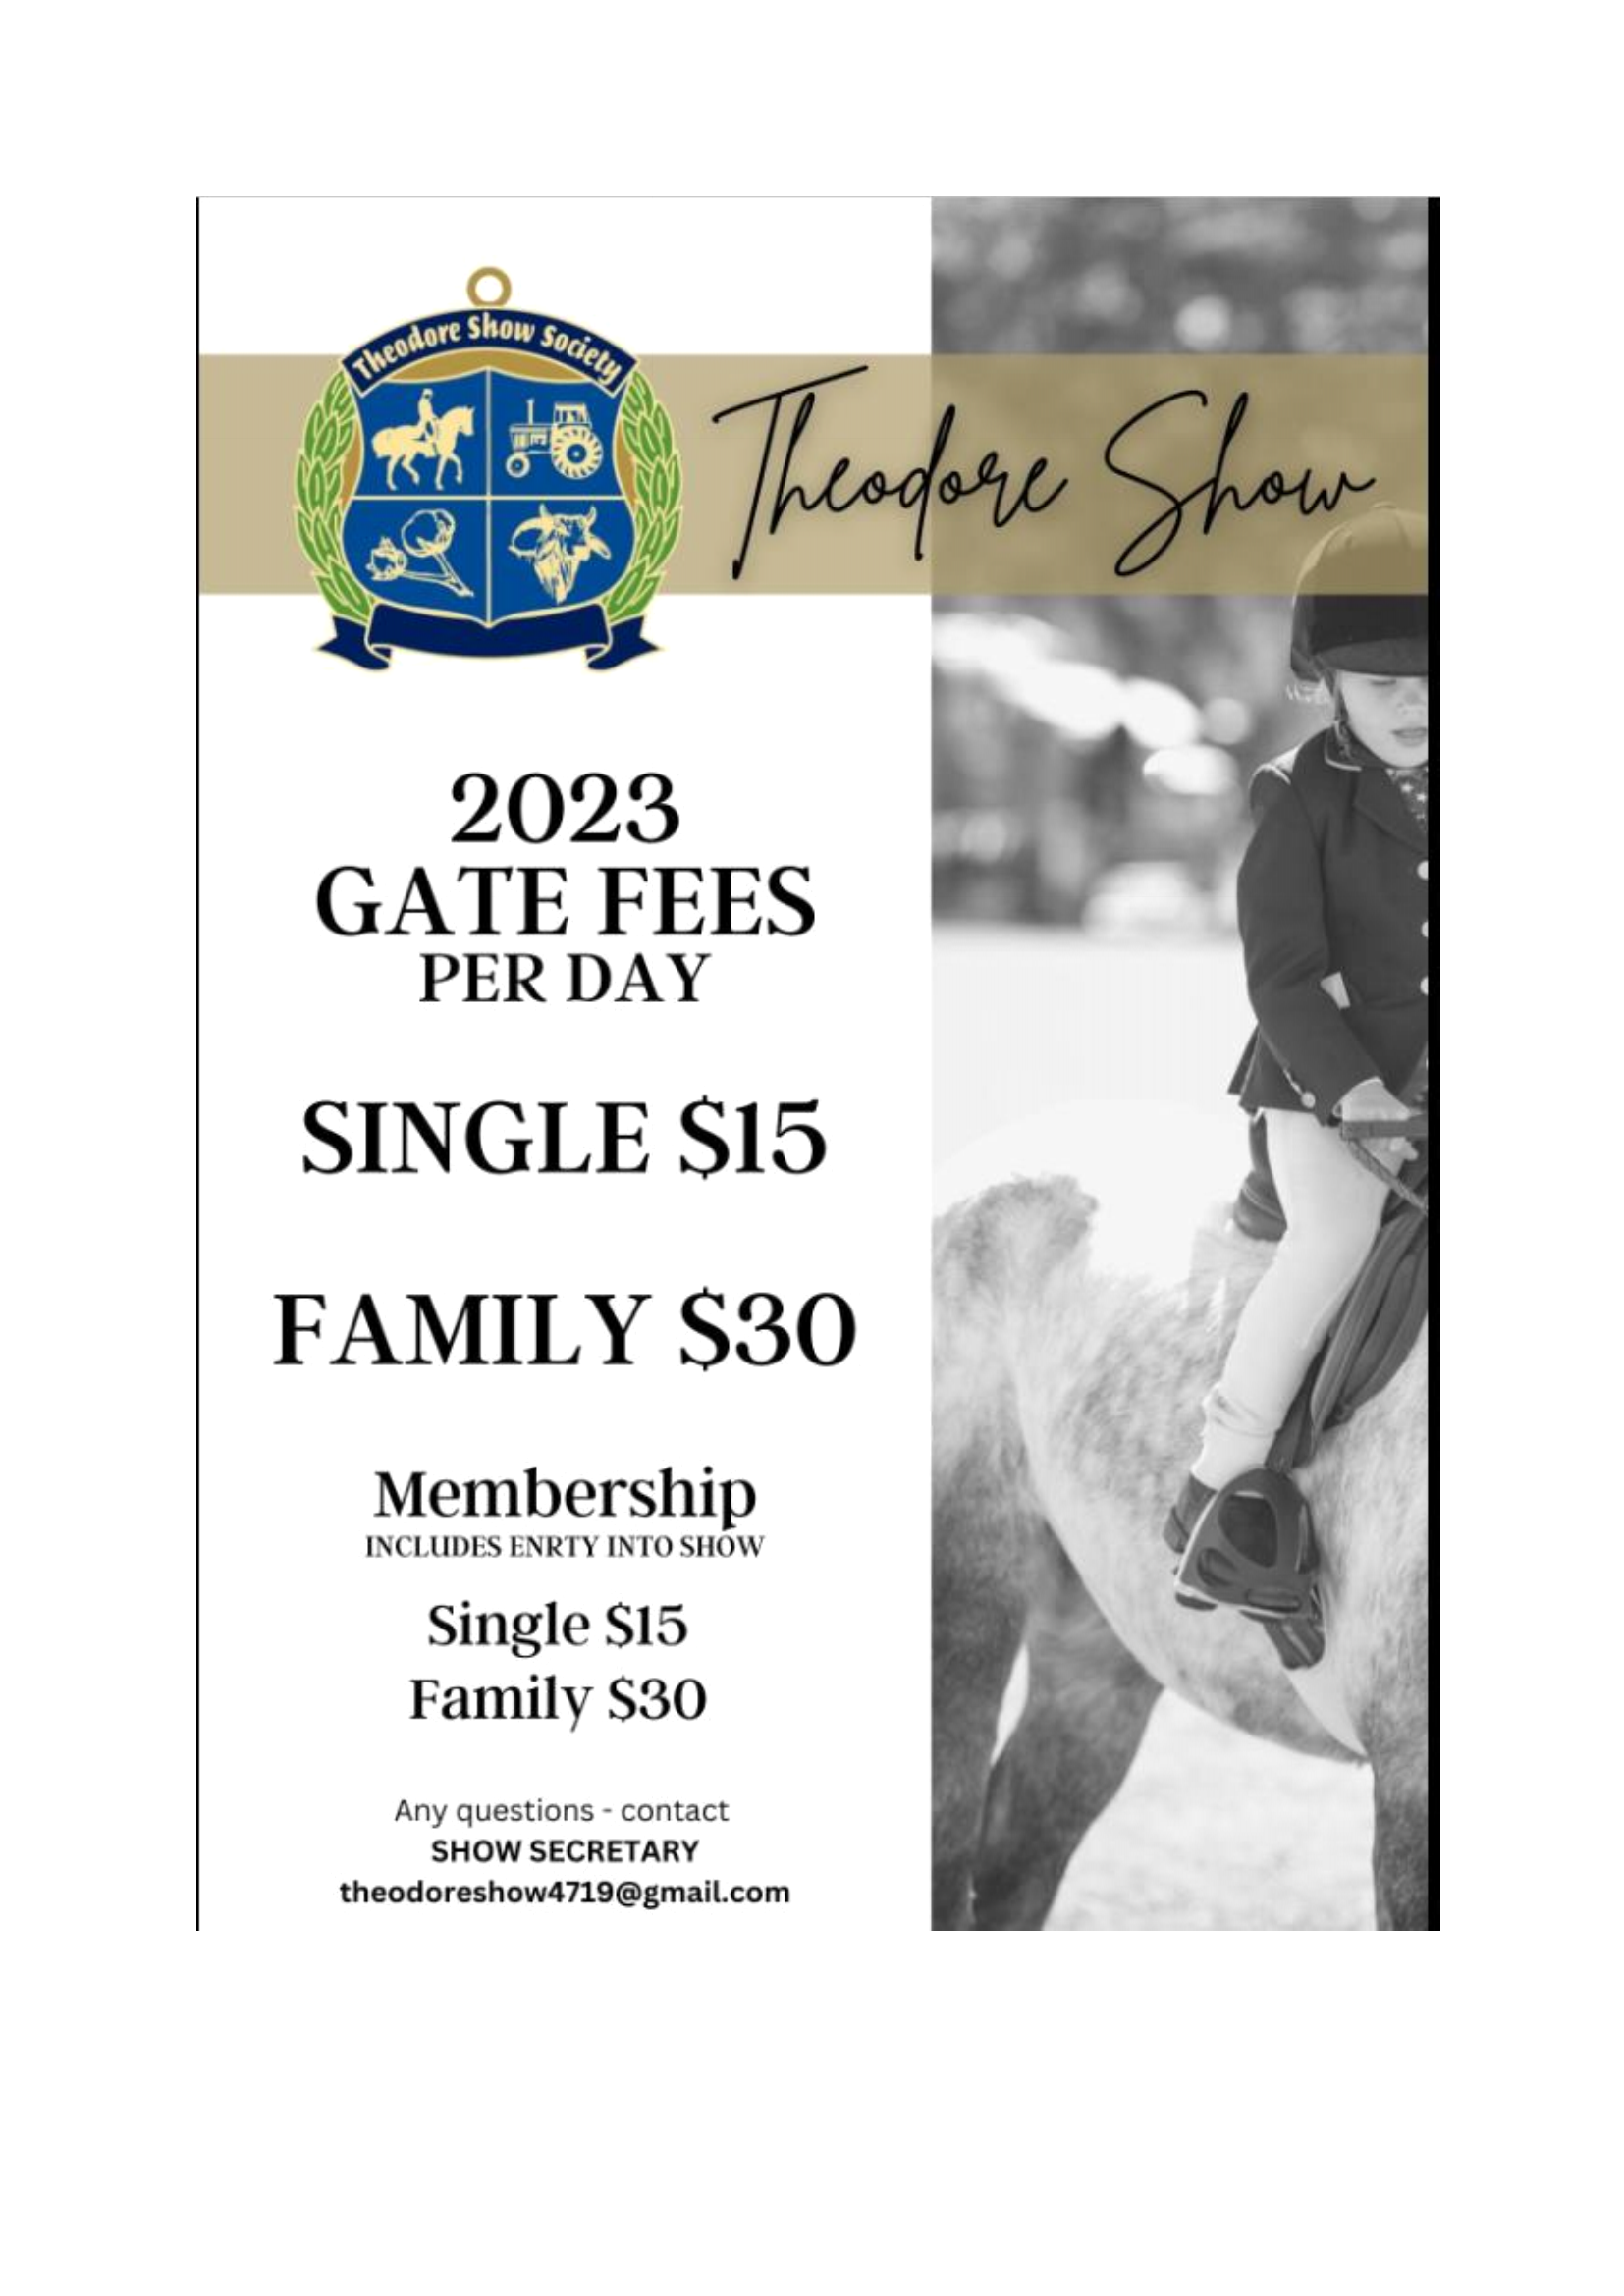 Theodore show gate fees 2023